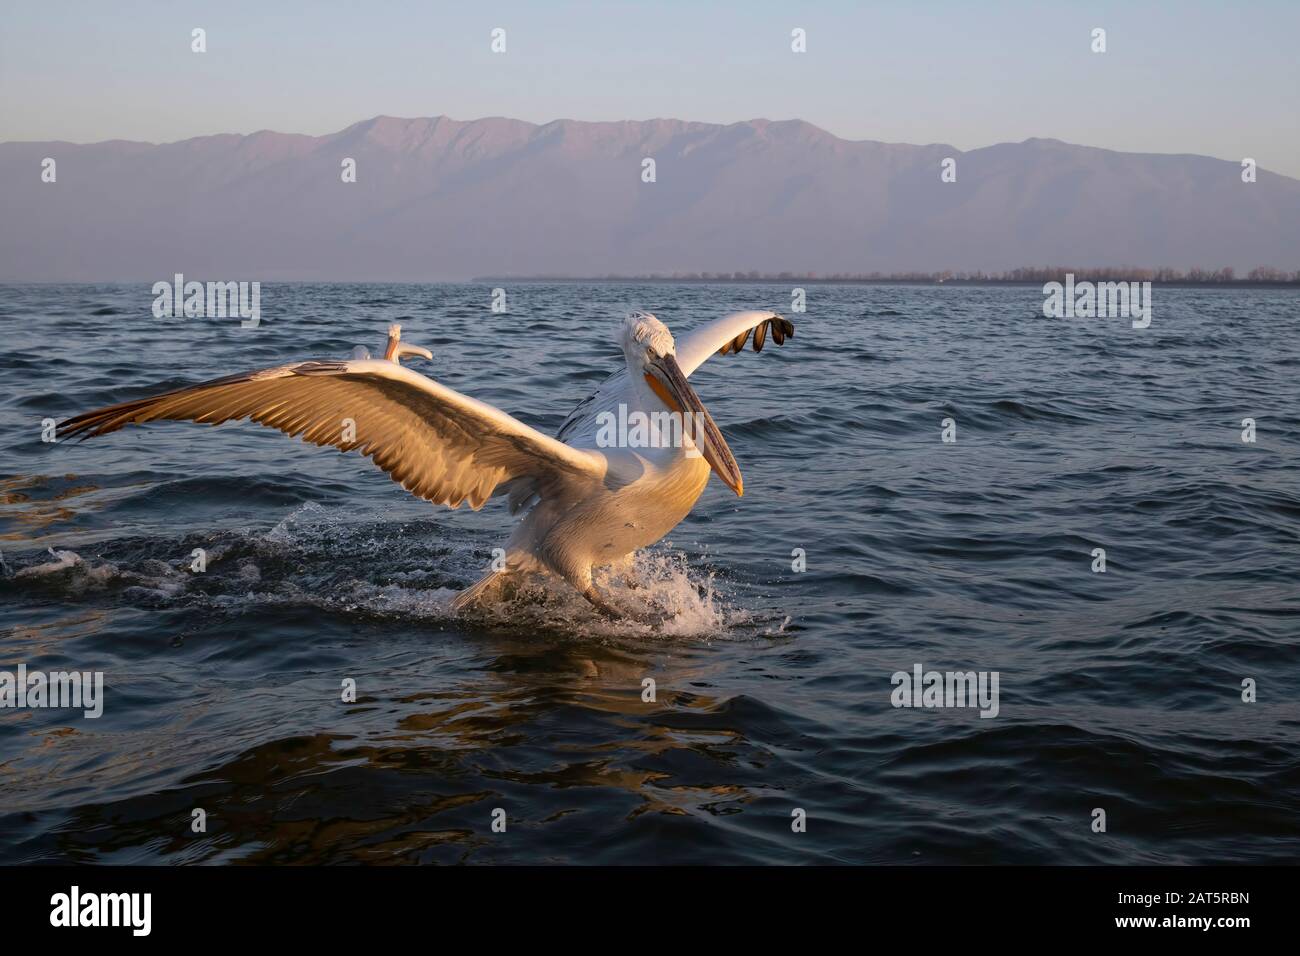 Dalmatian pelican from Greece Stock Photo